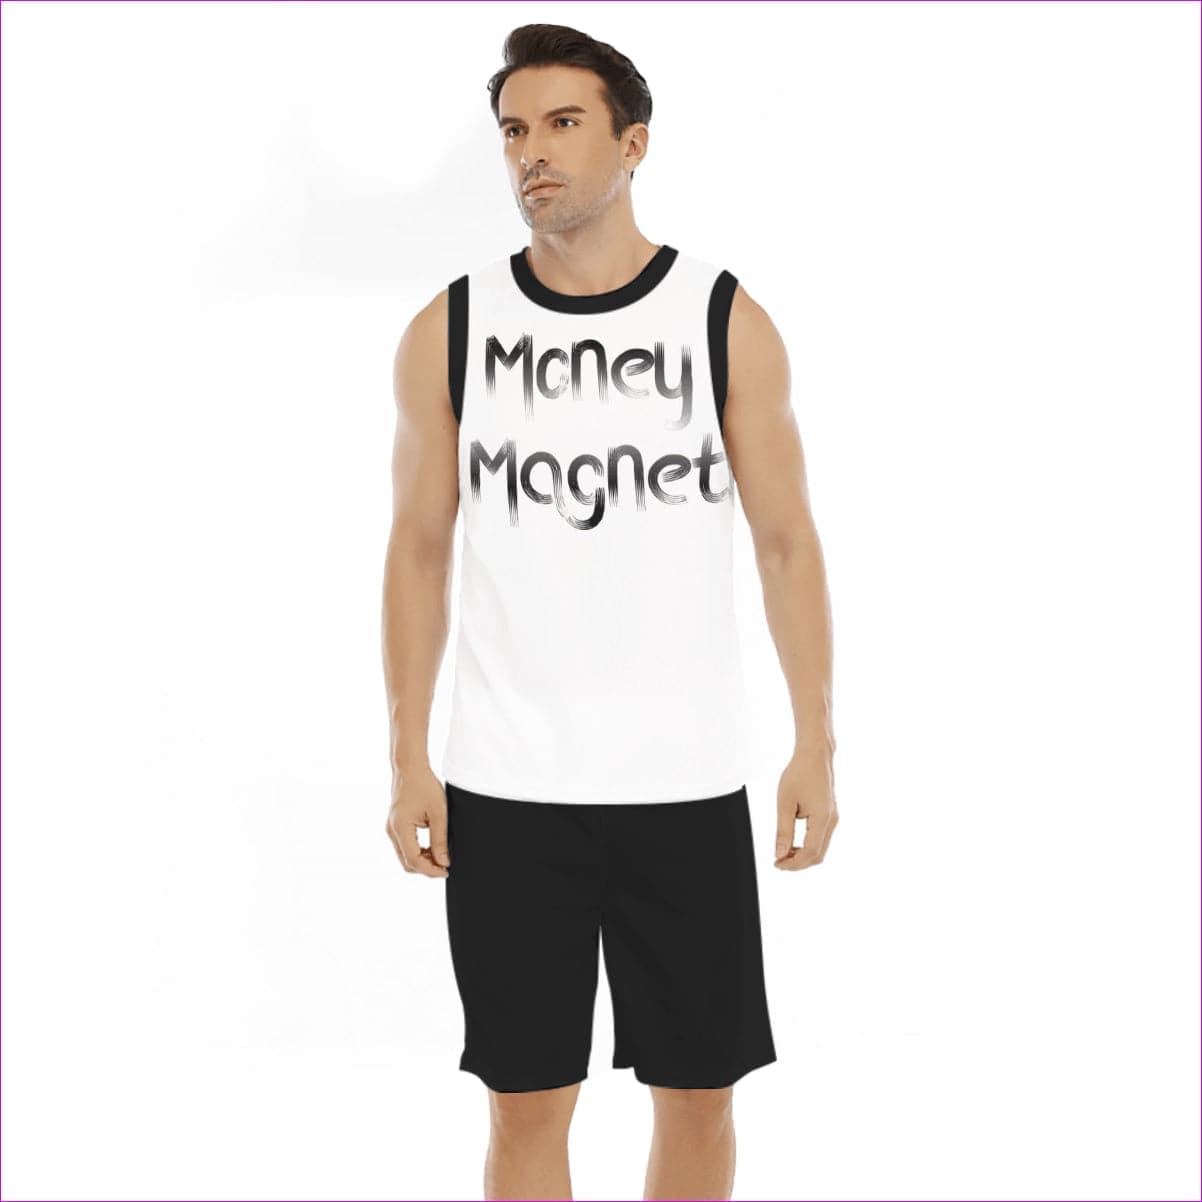 Money Magnet 2 Men's Basketball Clothing Set - men's top & short set at TFC&H Co.